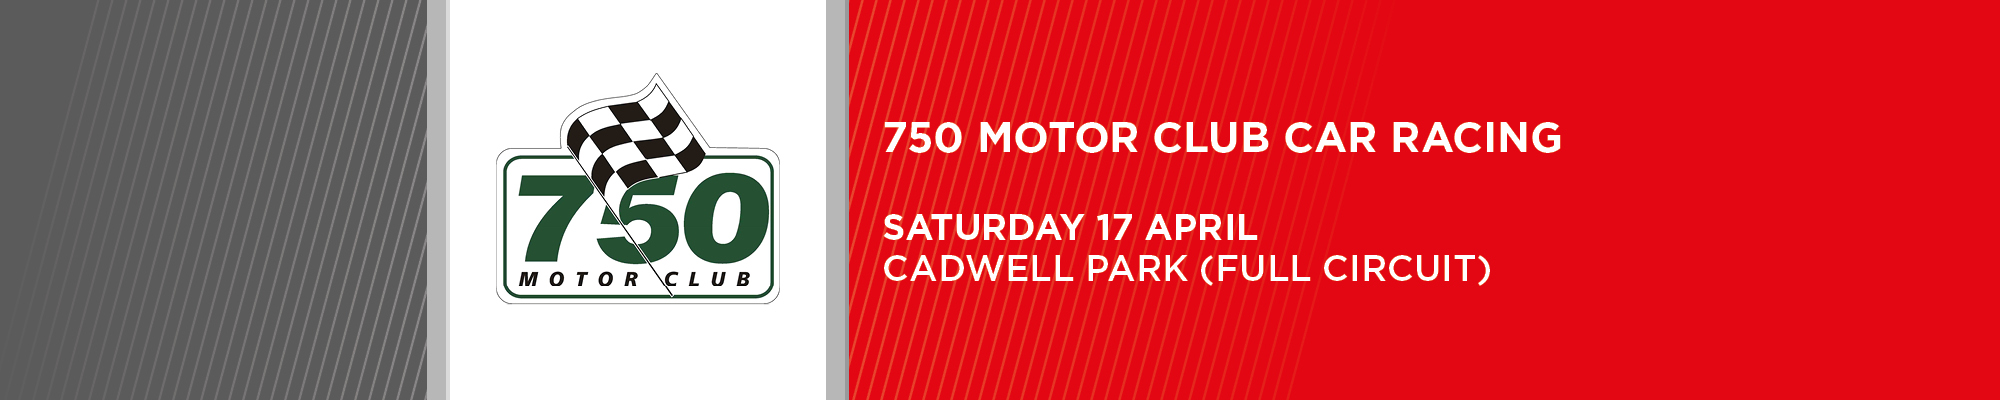 750 Motor Club Championships- NO SPECTATORS